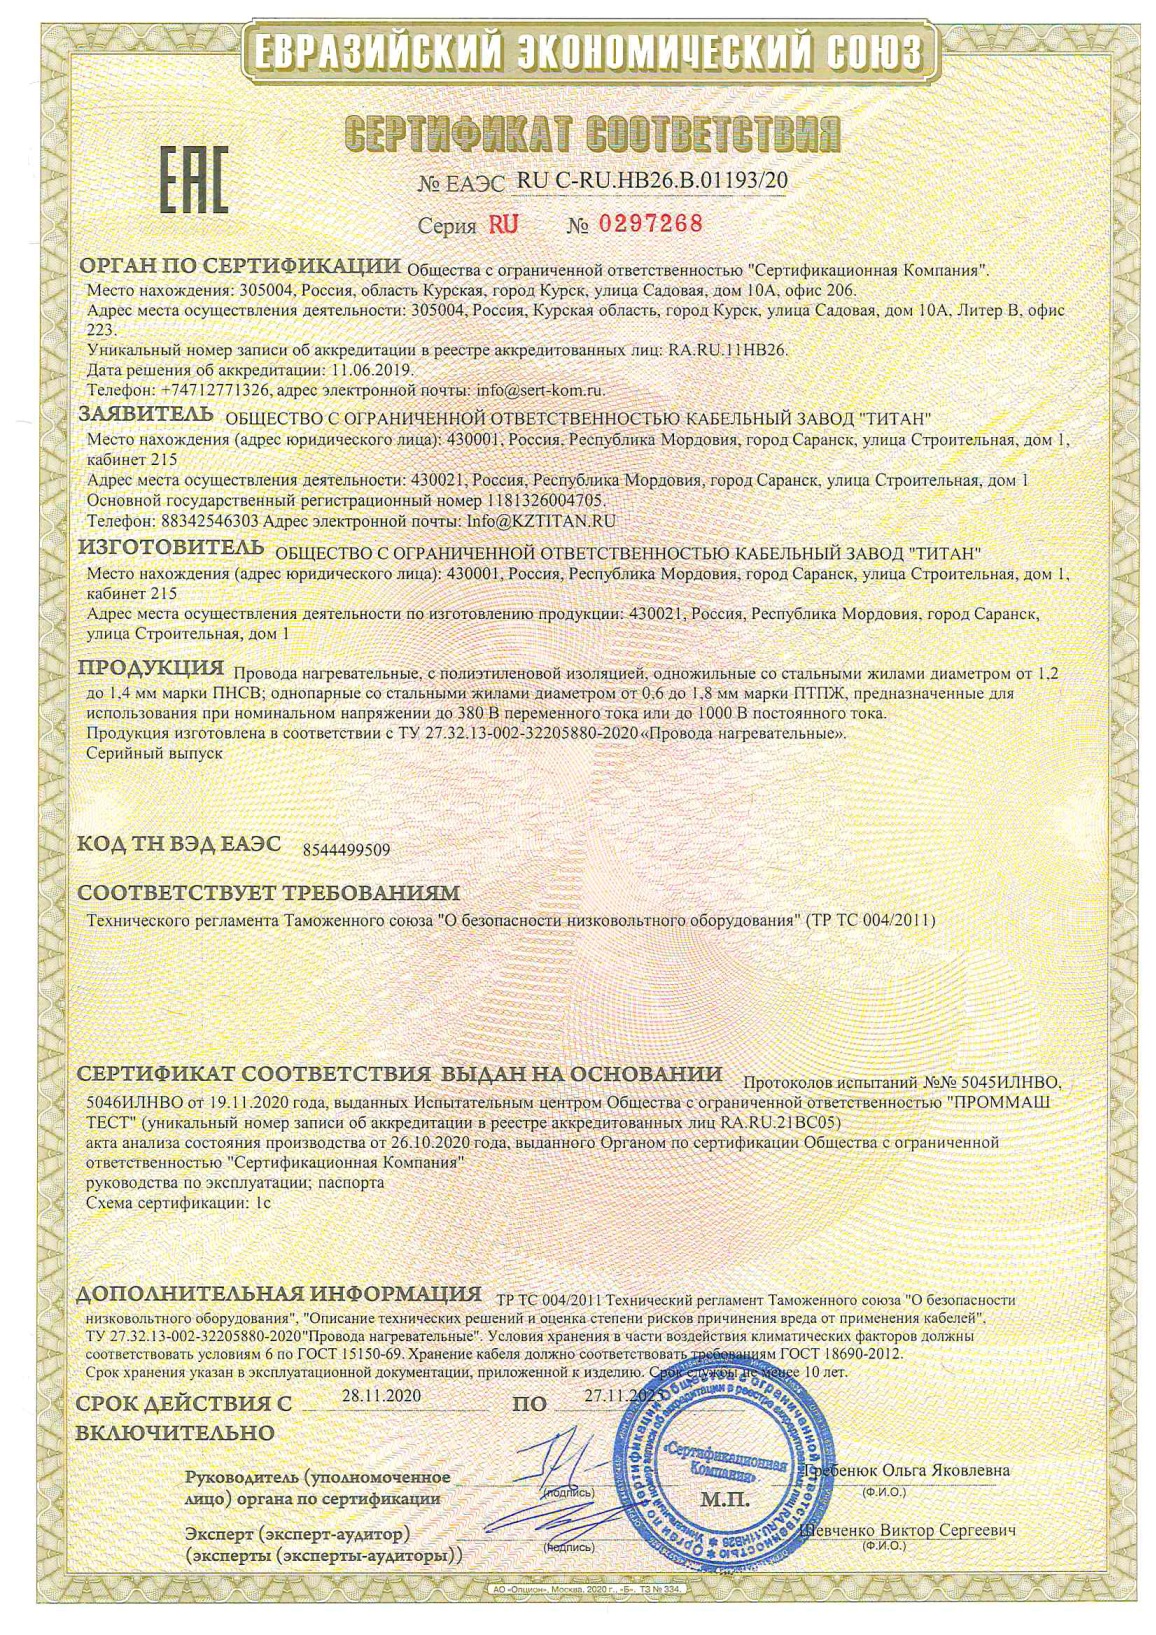 Сертификат соответствия № ЕАЭС RU C-RU.HB26.B.01193/20. Серия RU, №0297268